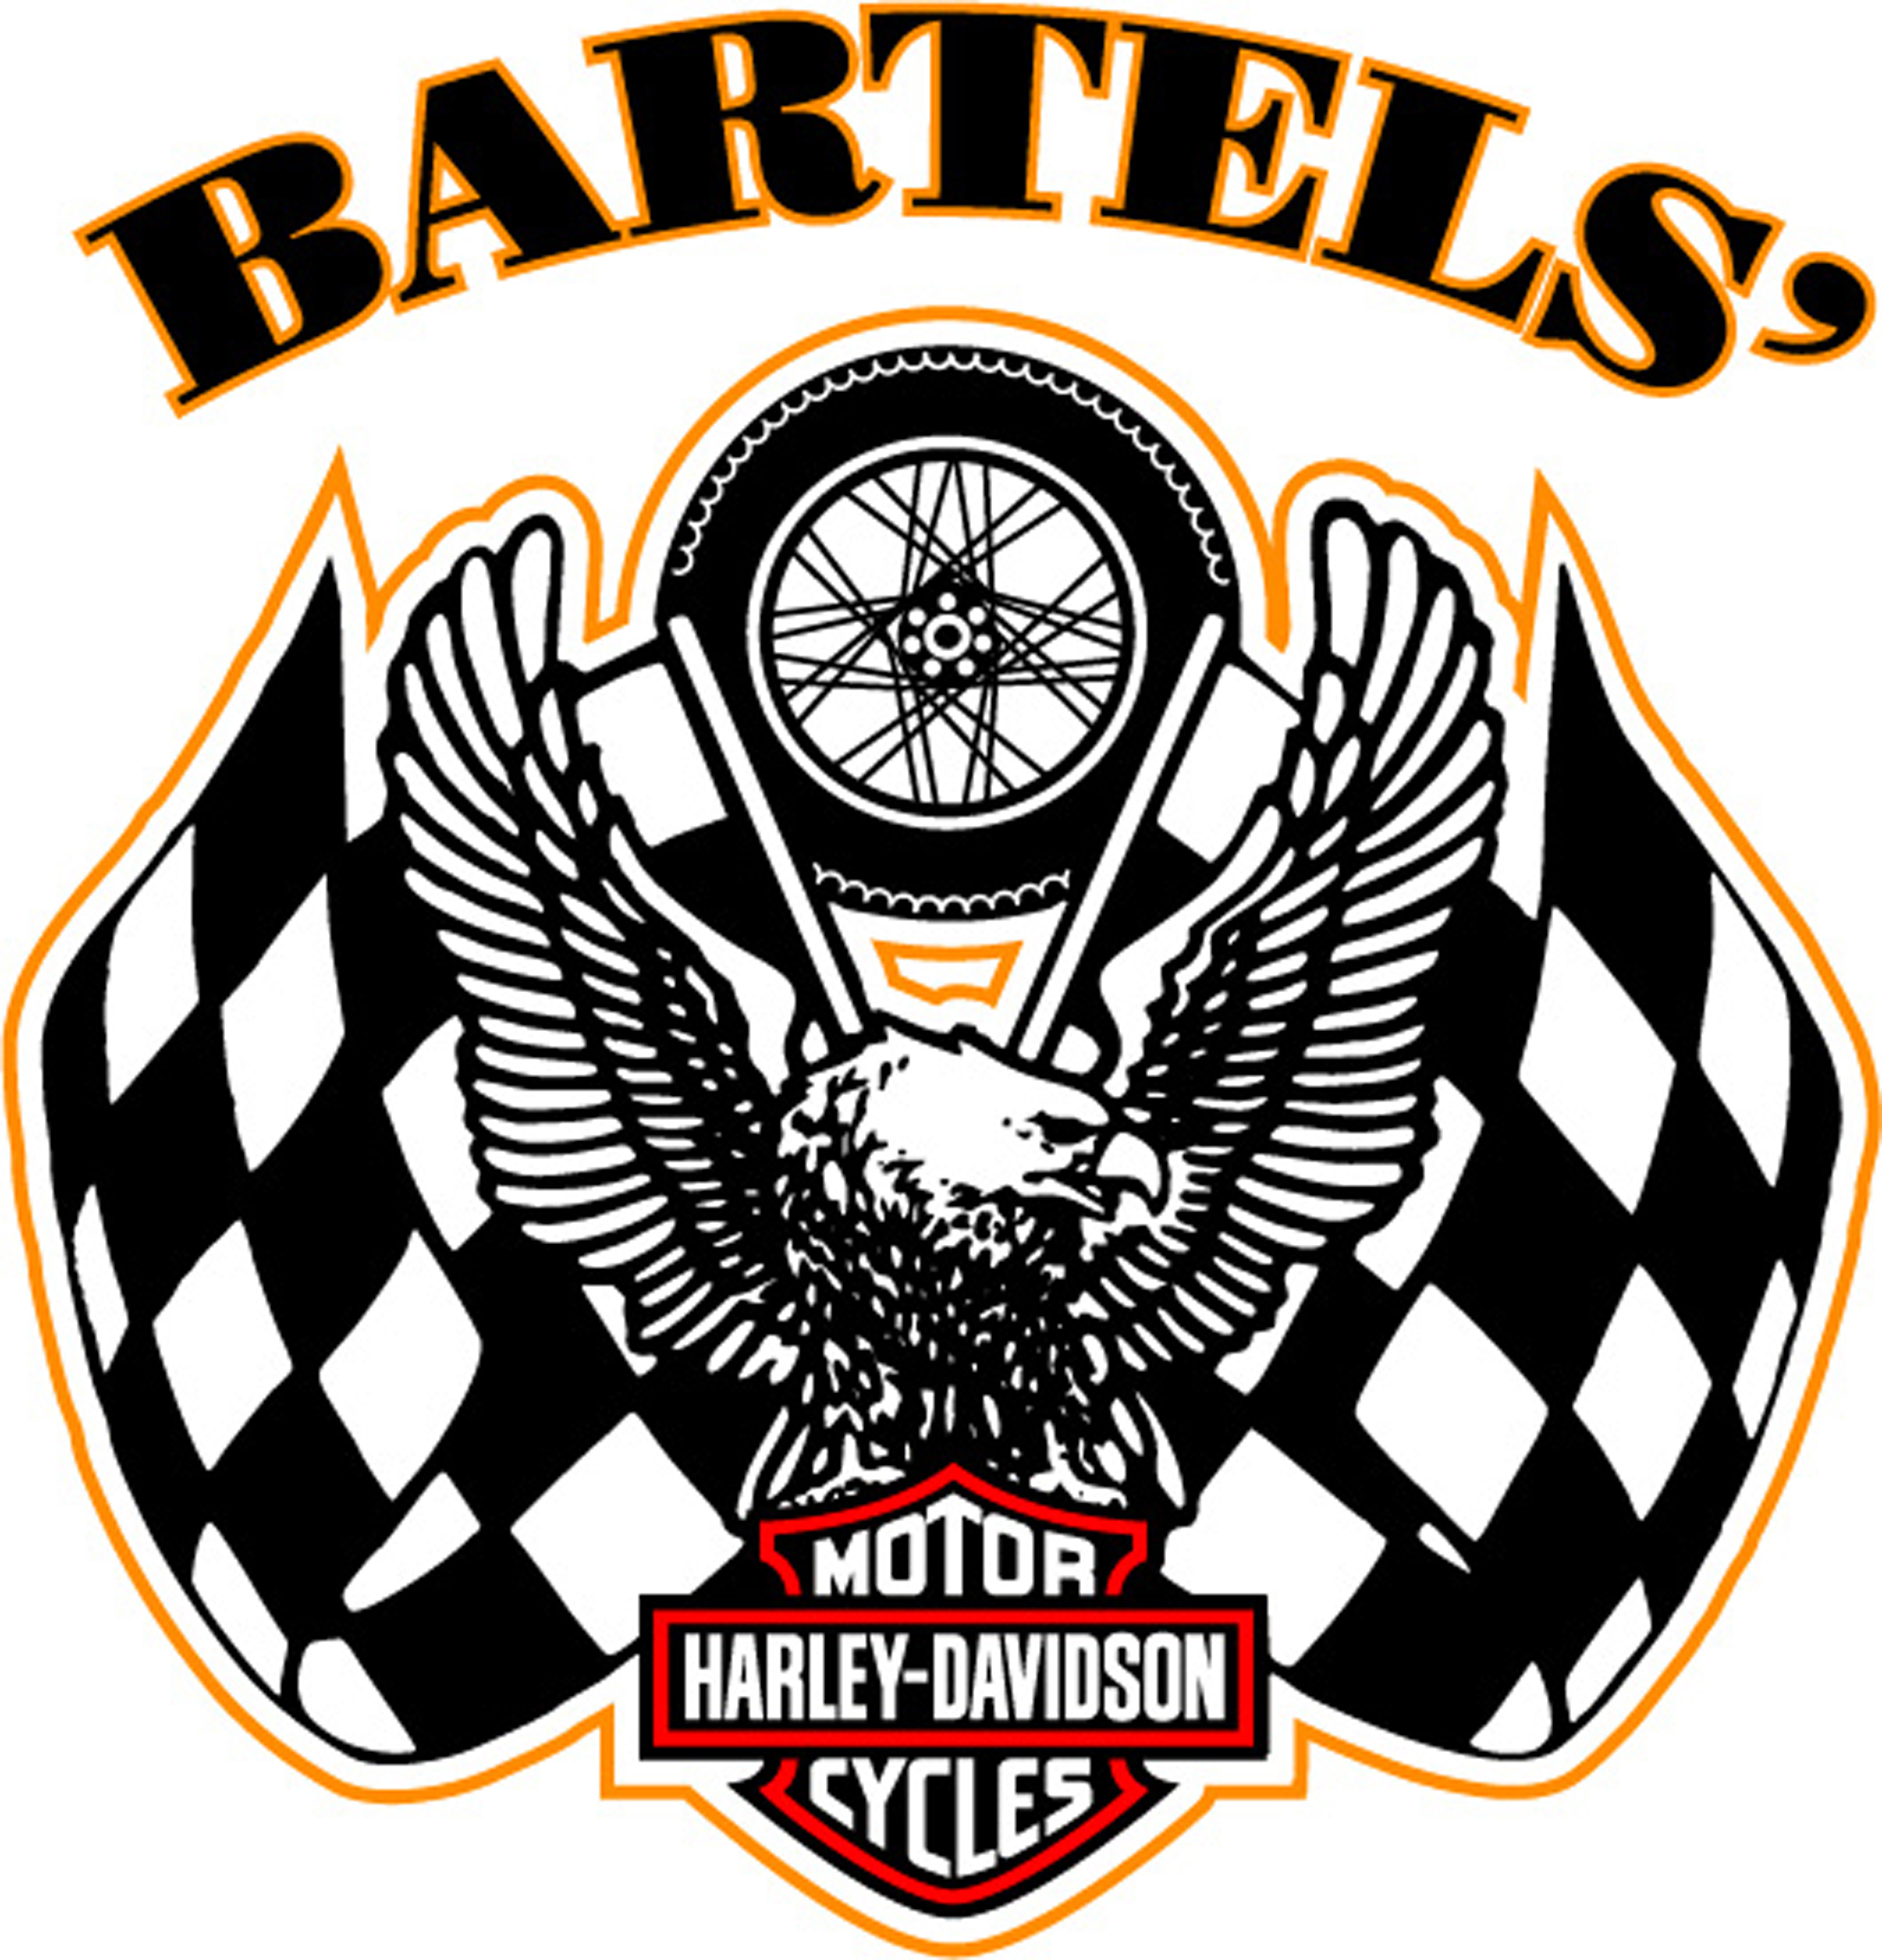 Harley Davidson Eagle Drawing - ClipArt Best